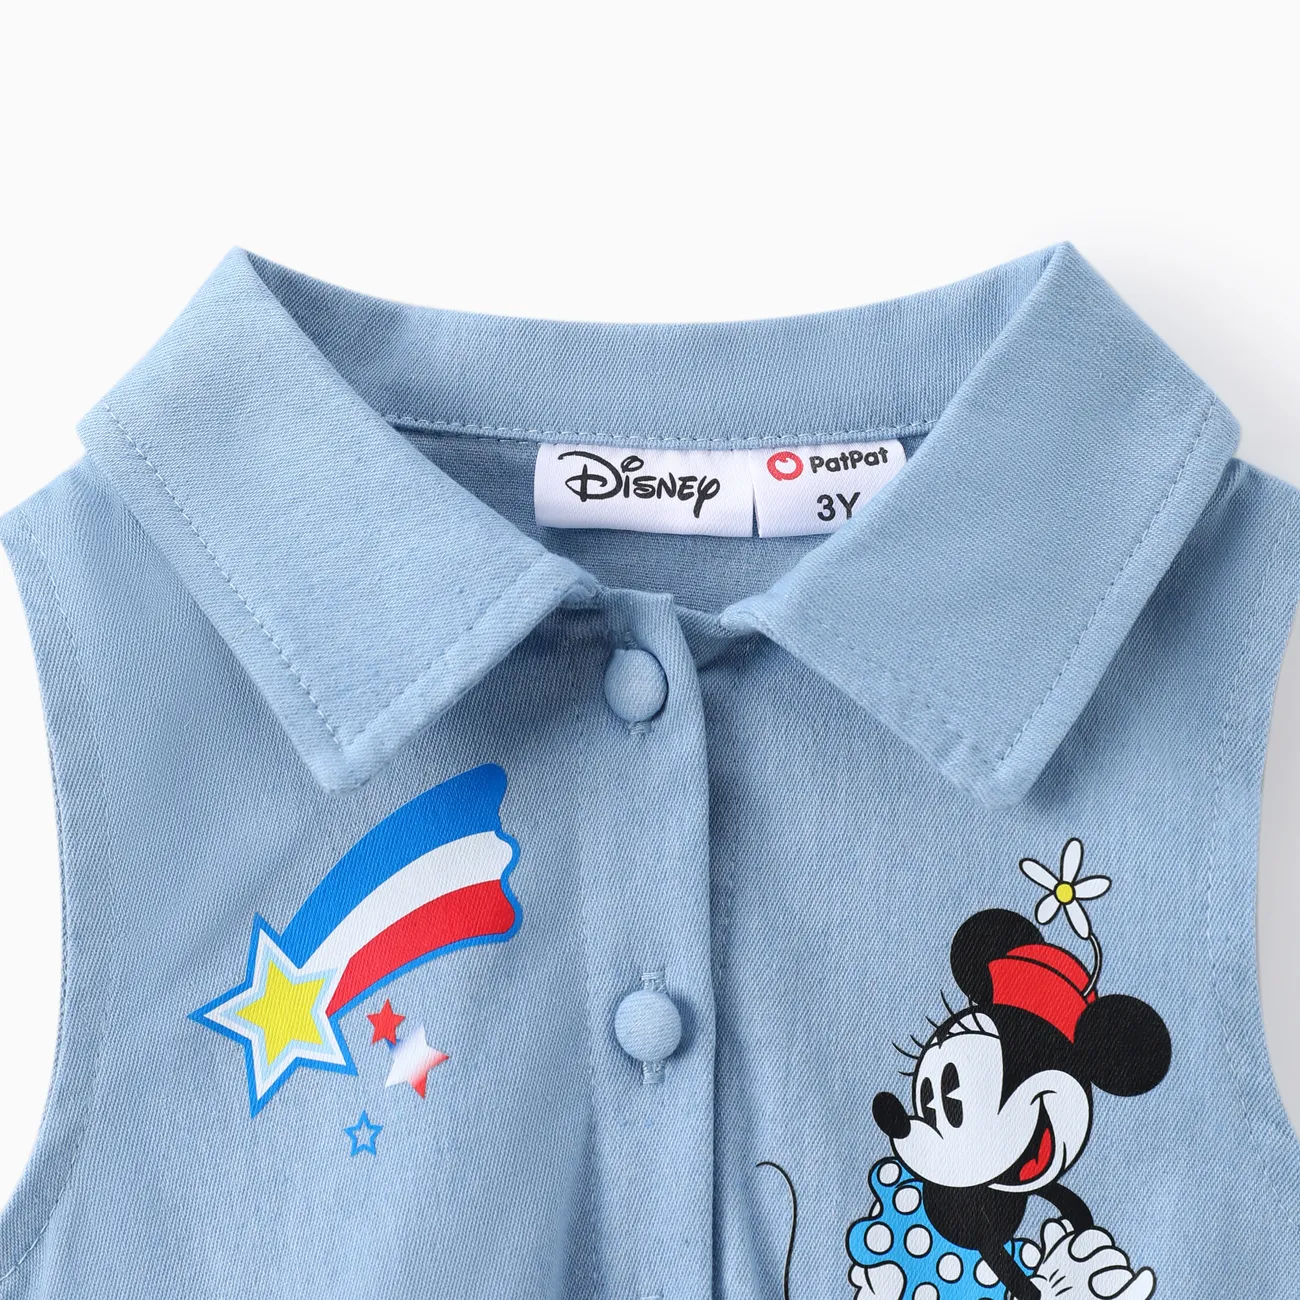 Disney Mickey and Friends Toddler Girls Independence Day 1pc Star Character Print Denim-like Sleeveless Dress DENIMBLUE big image 1